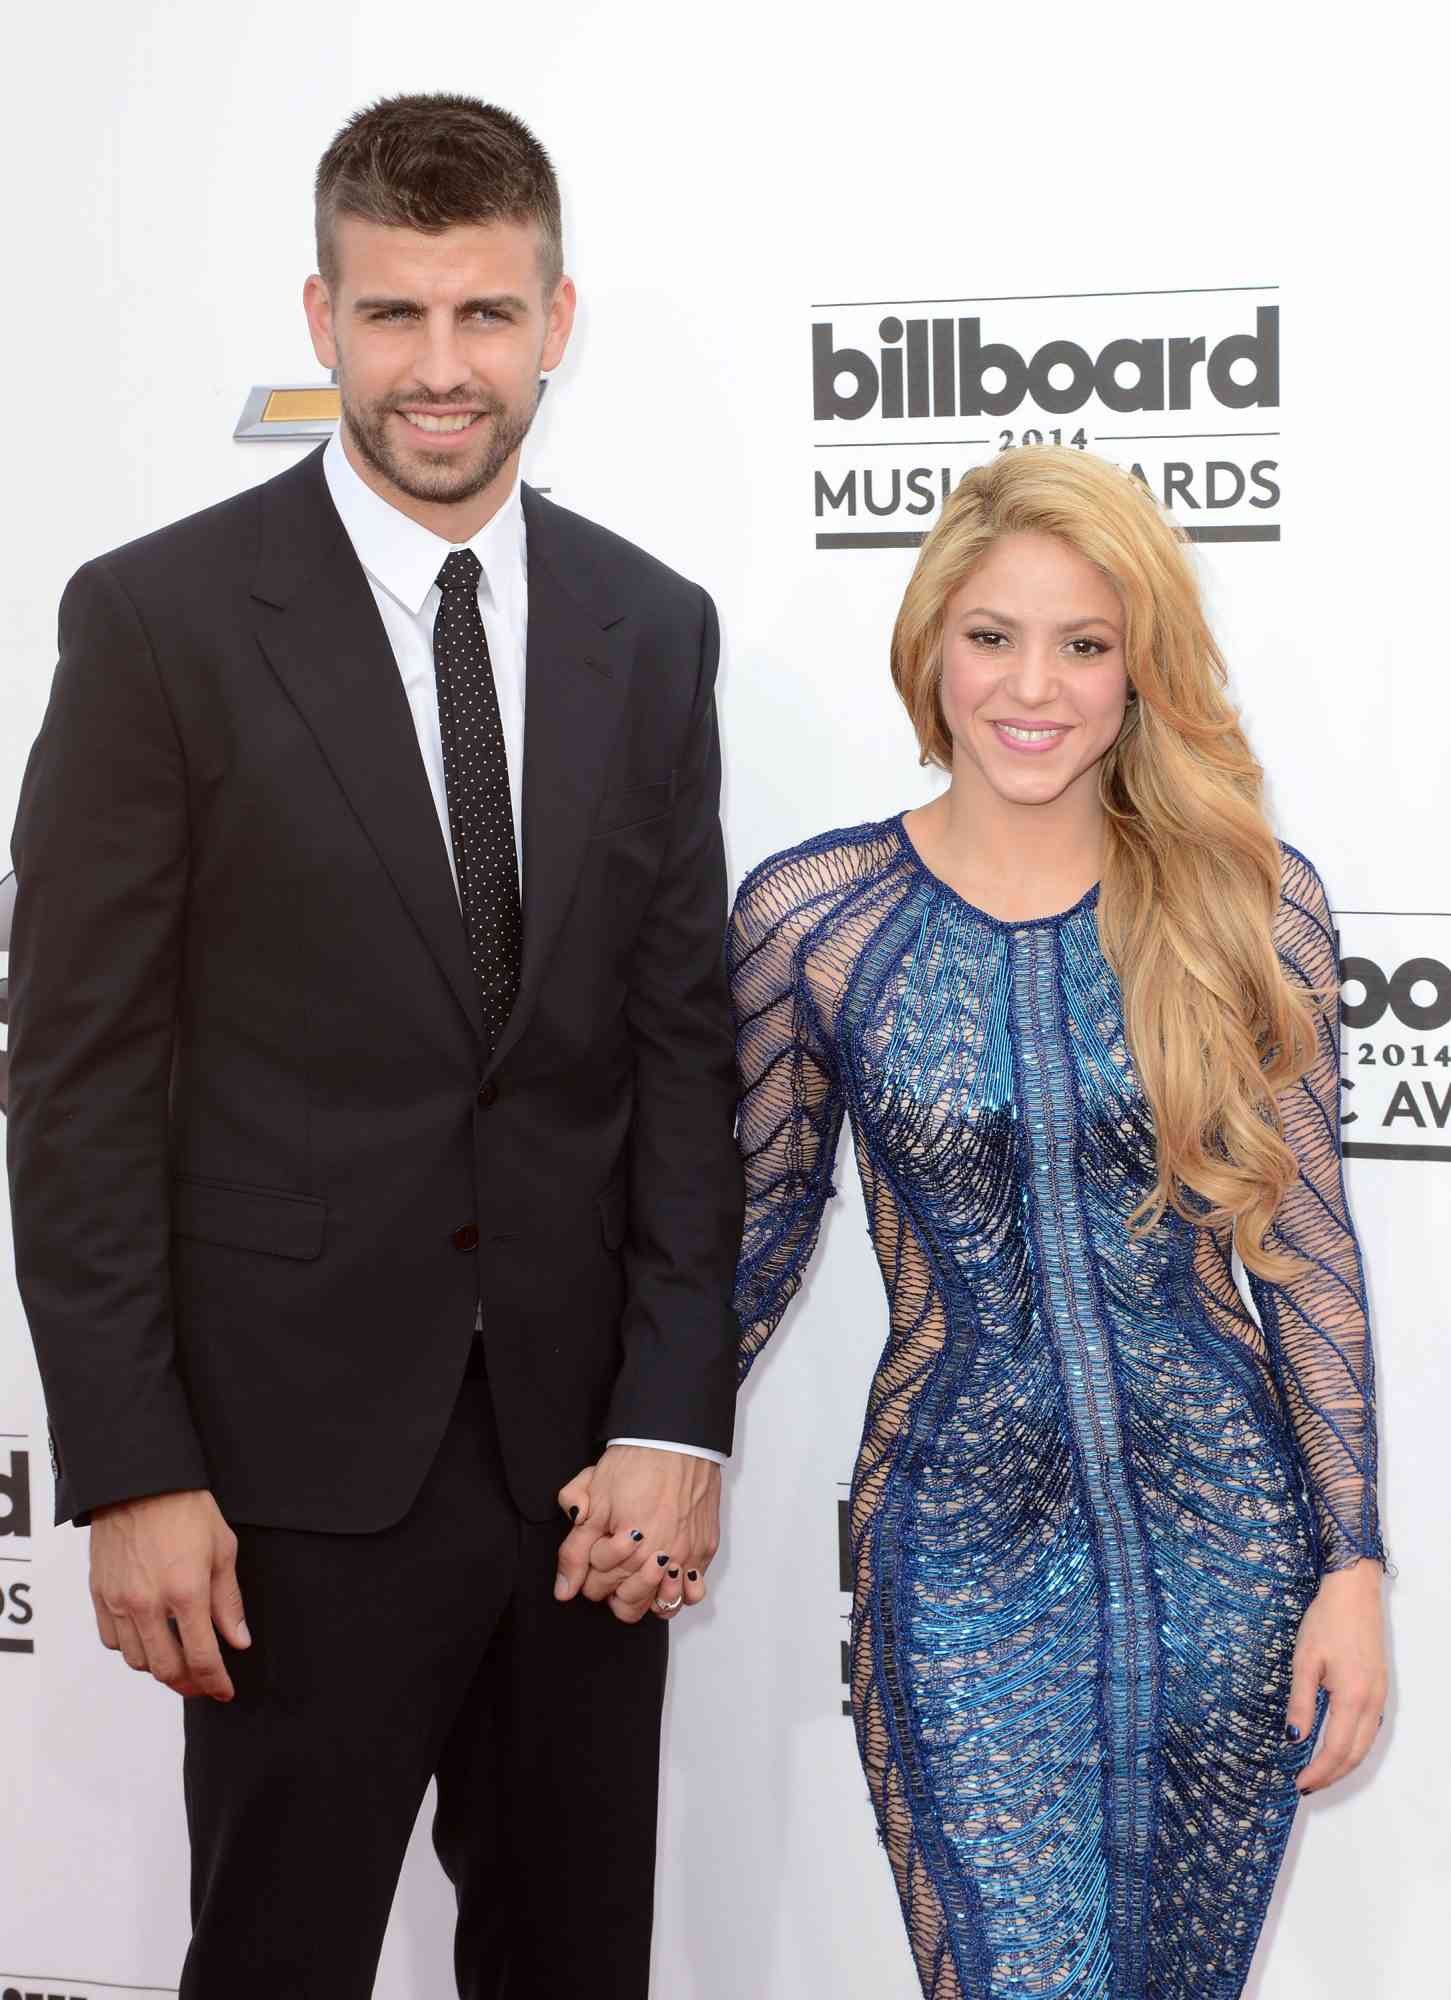 2014 Billboard Music Awards - Arrivals